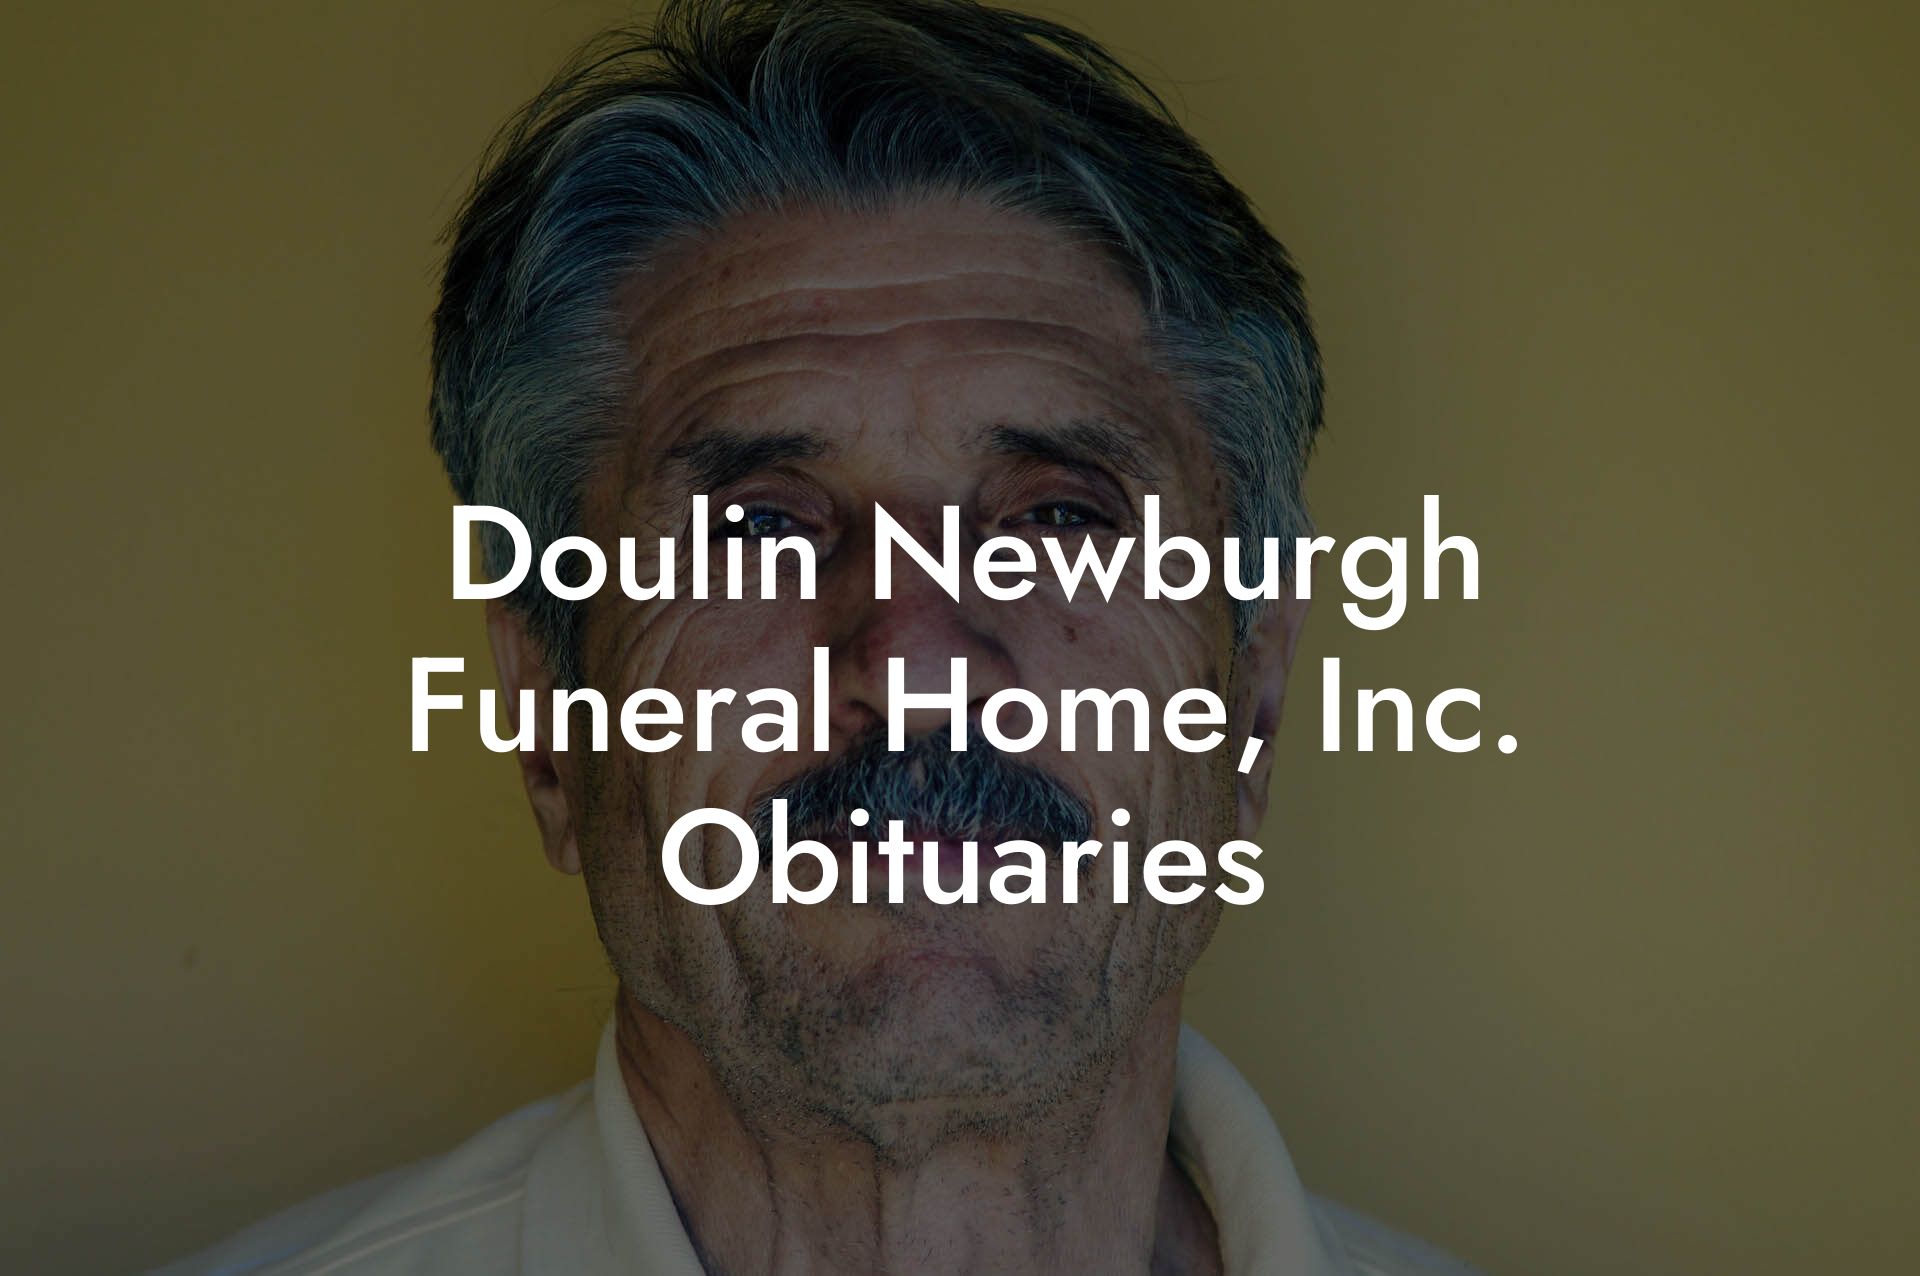 Doulin Newburgh Funeral Home, Inc. Obituaries